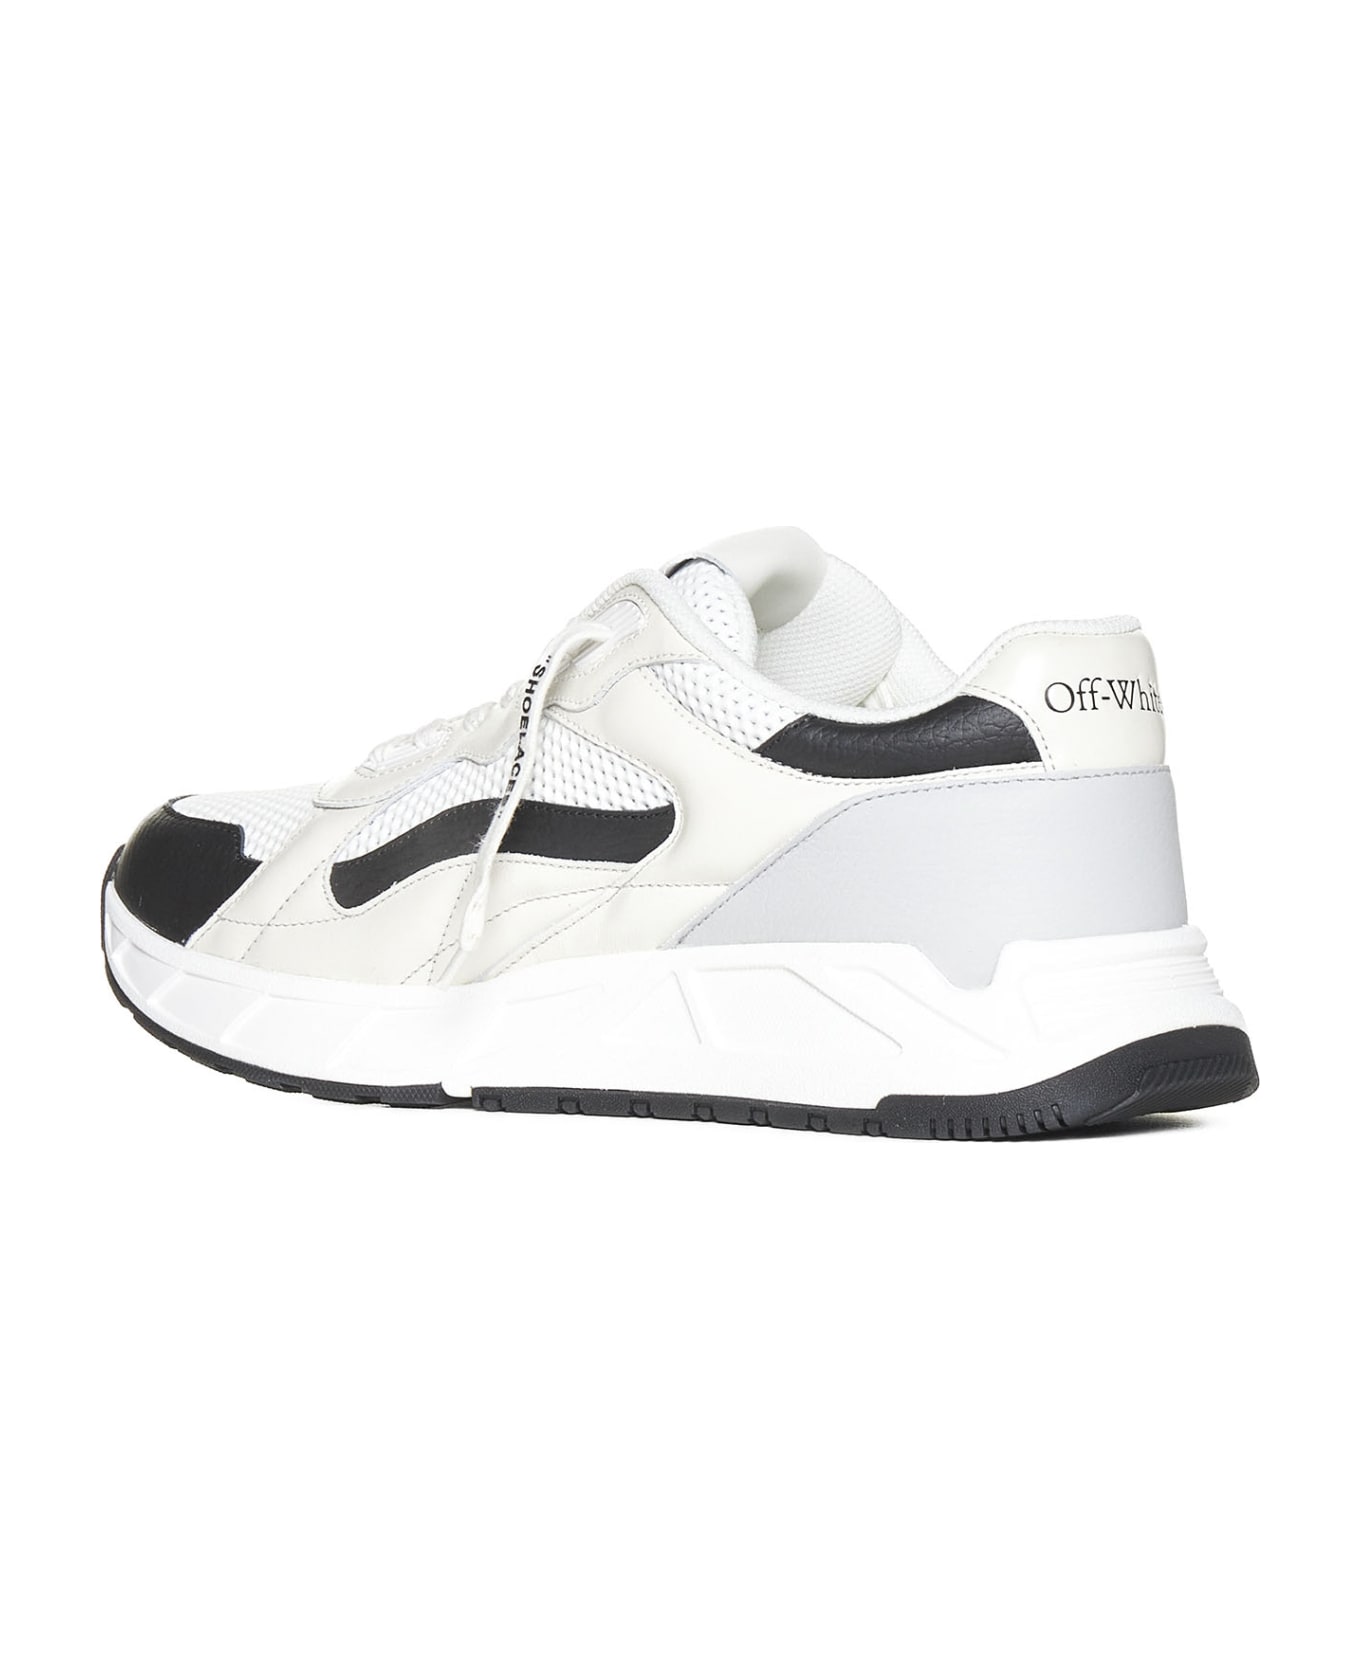 Off-White 'space Kick' Sneakers - White Blac